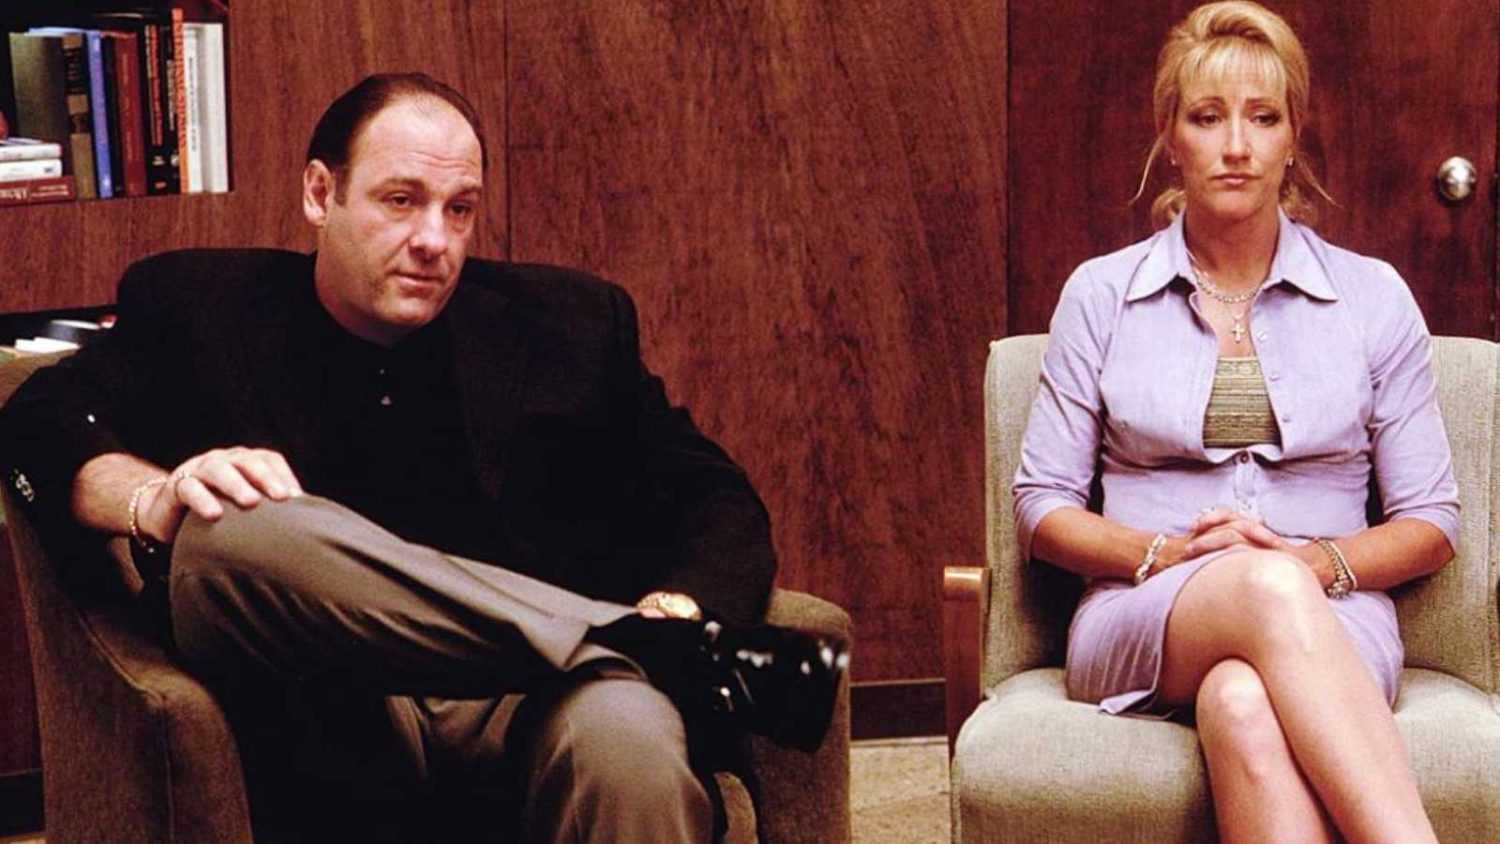 James Gandolfini and Edie Falco in The Sopranos (1999)